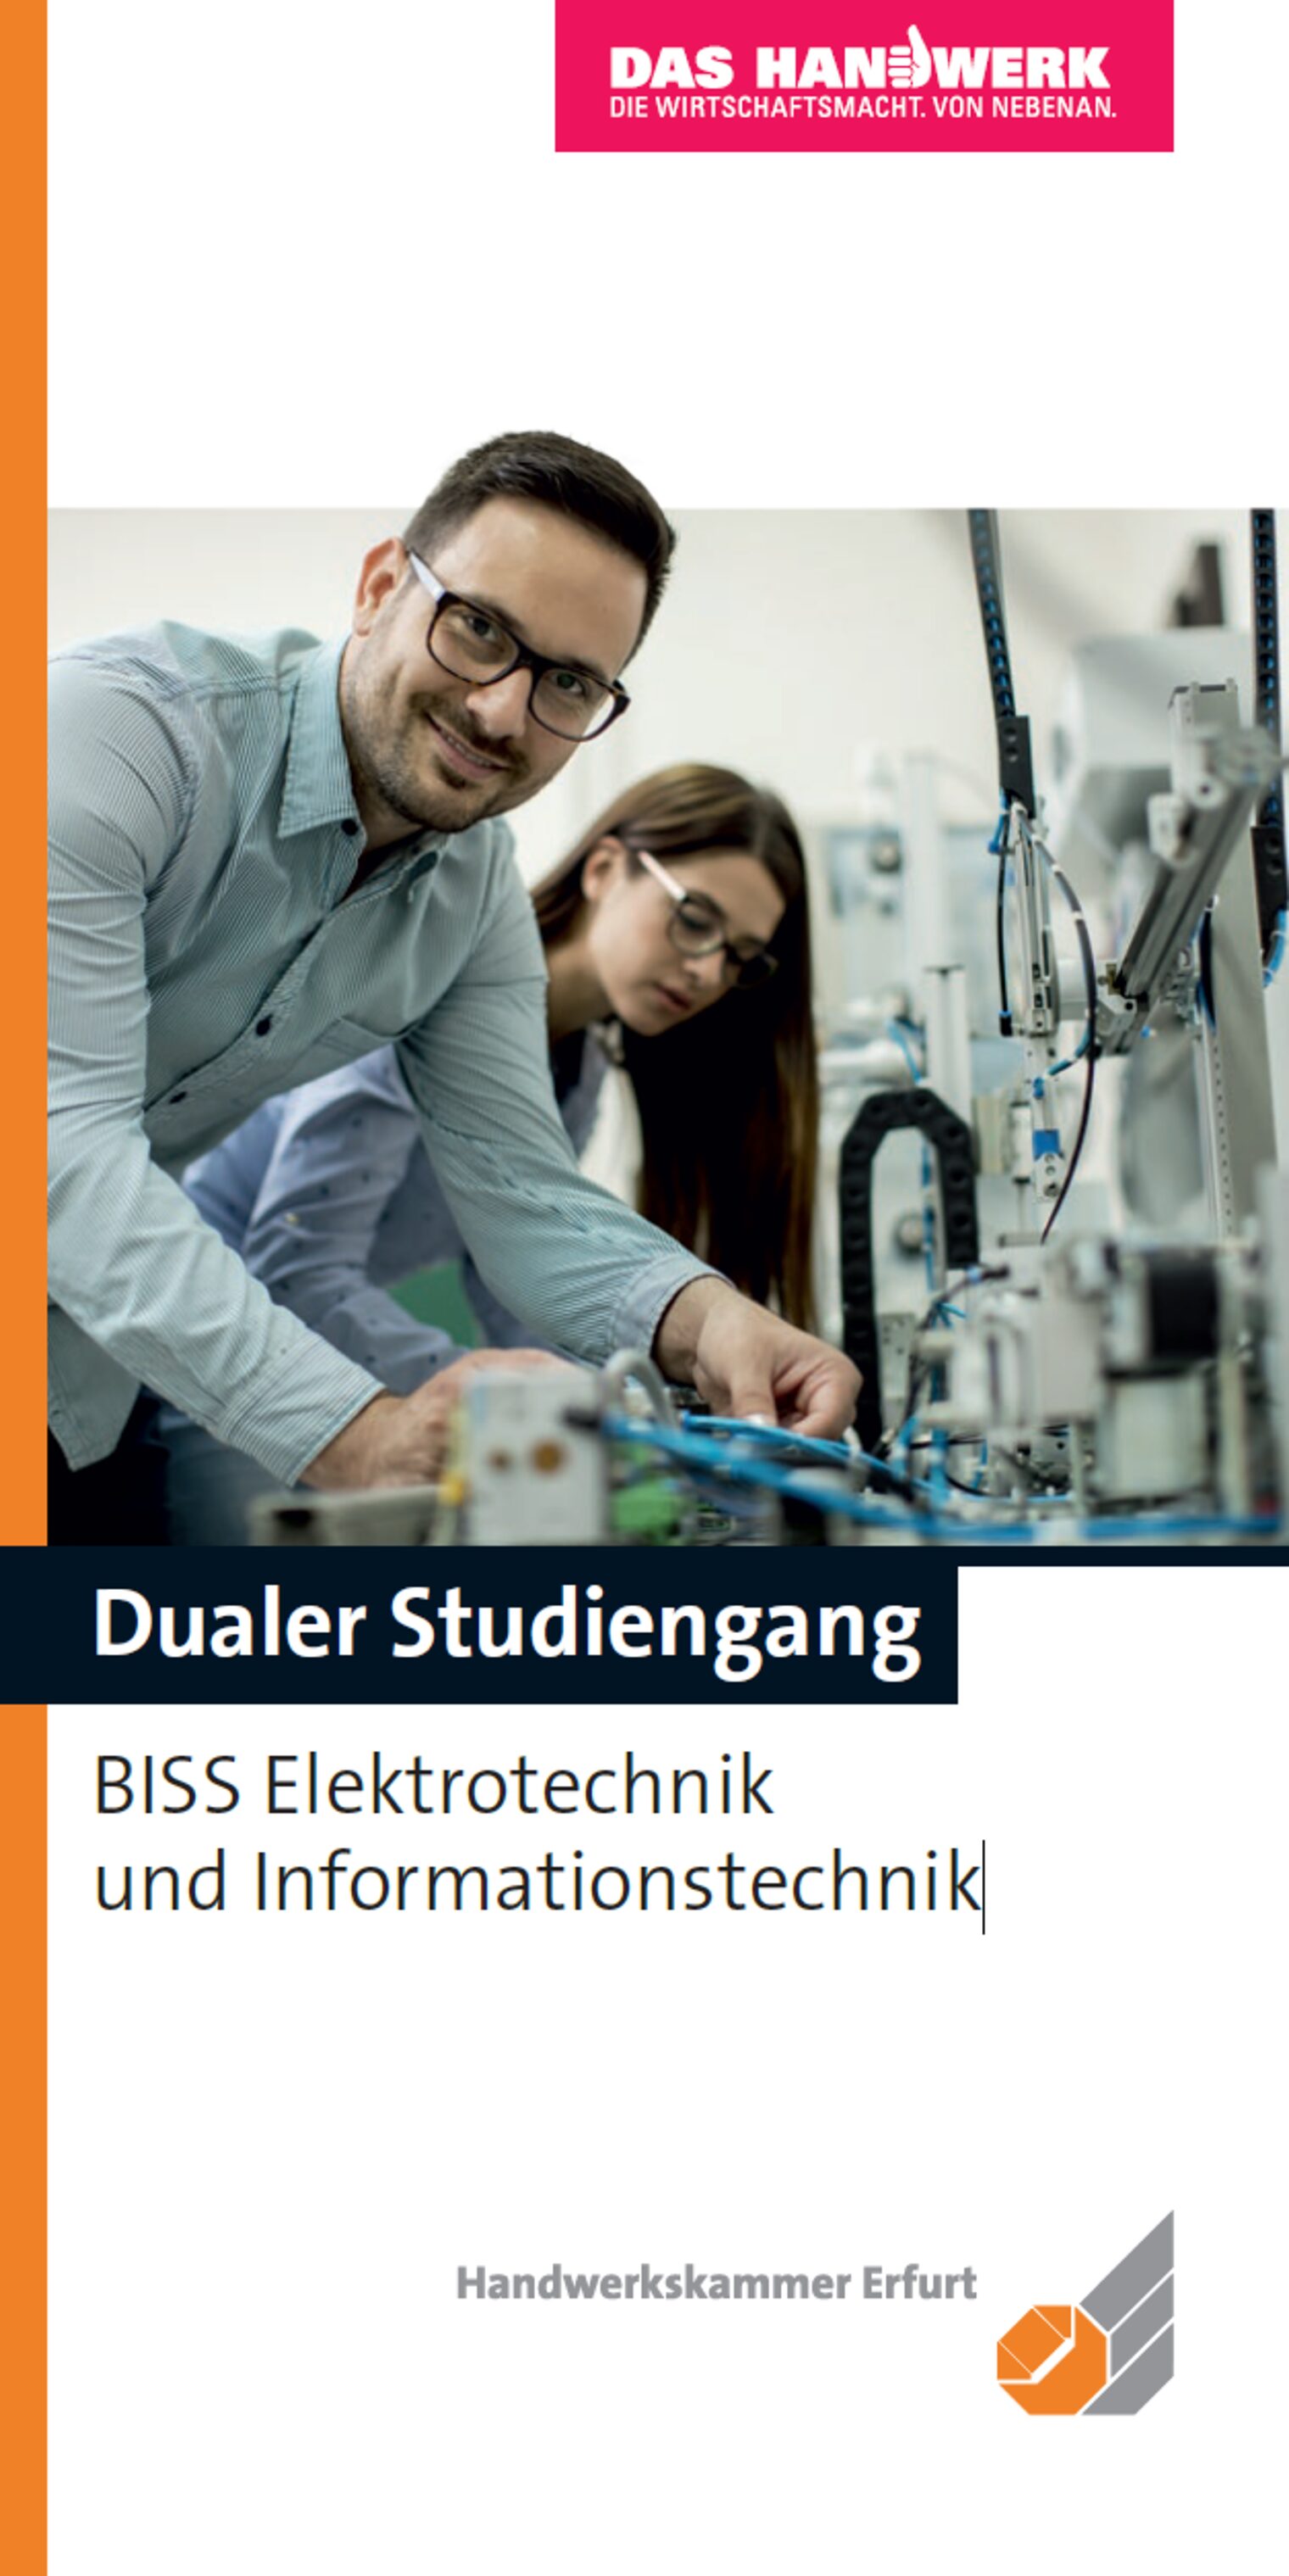 Dualer Studiengang BISS Elektrotechnik und Informationstechnik